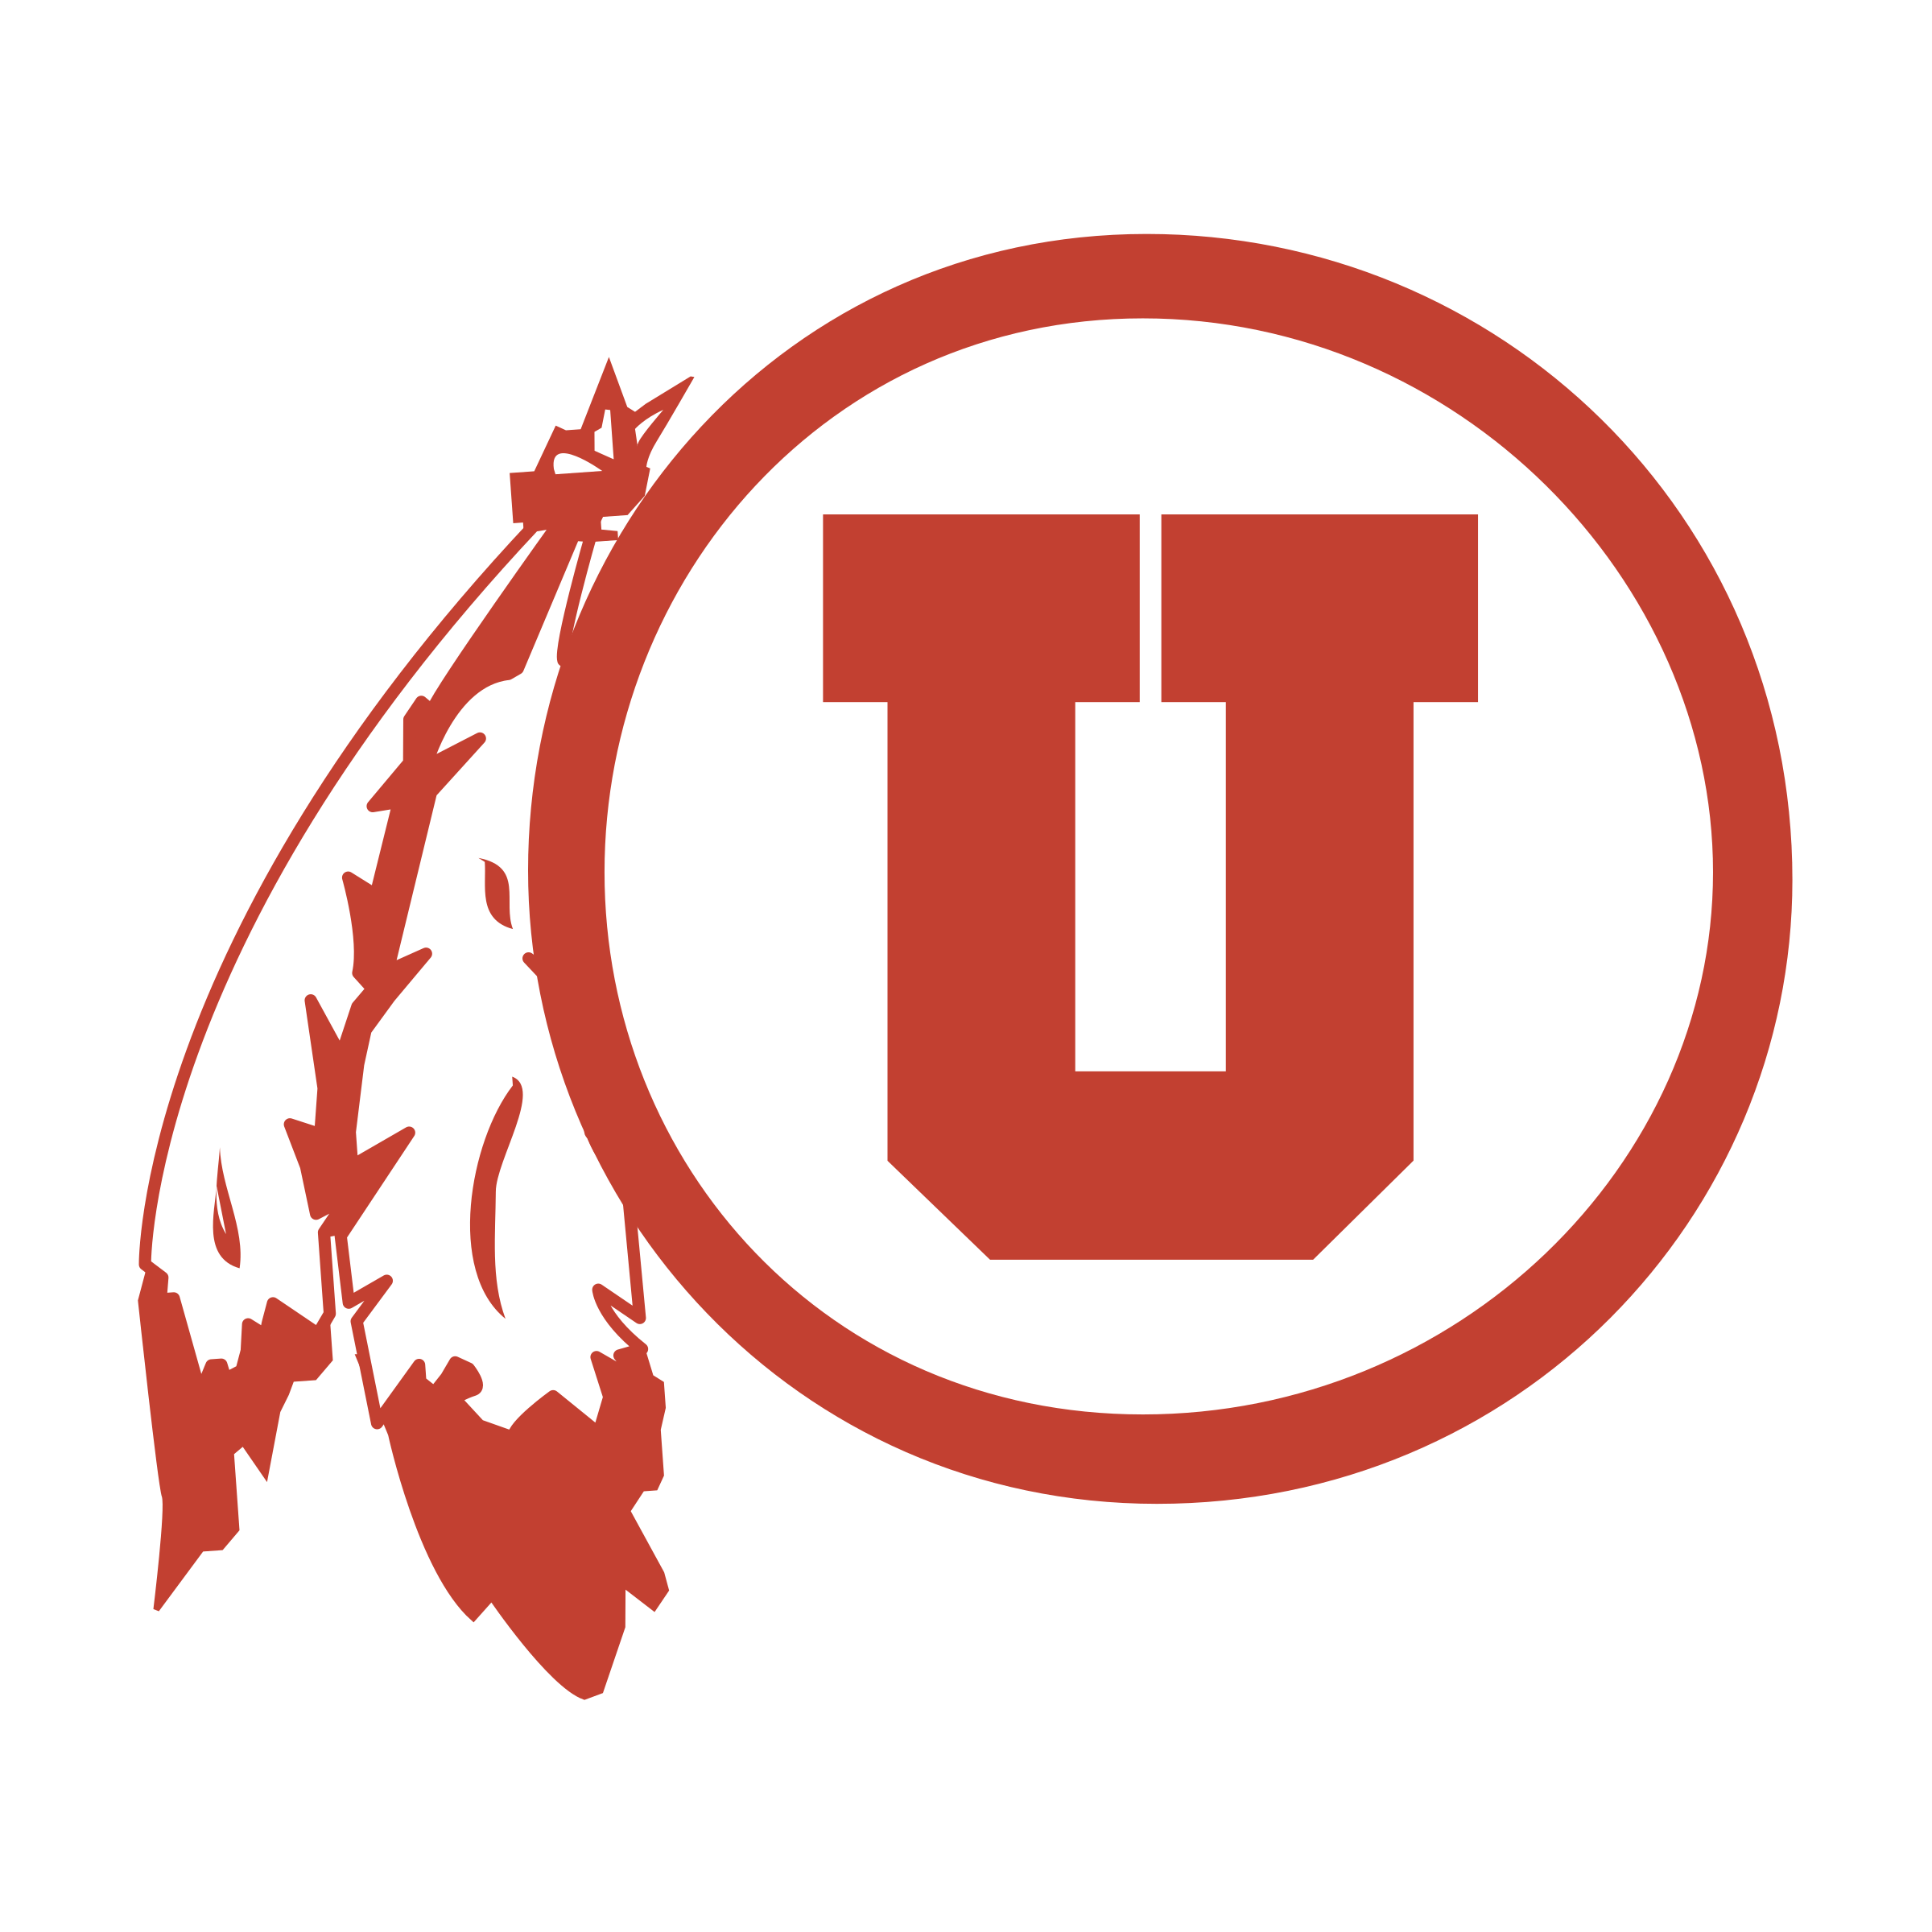 The Utes Logo - Utah Utes Logo PNG Transparent & SVG Vector - Freebie Supply